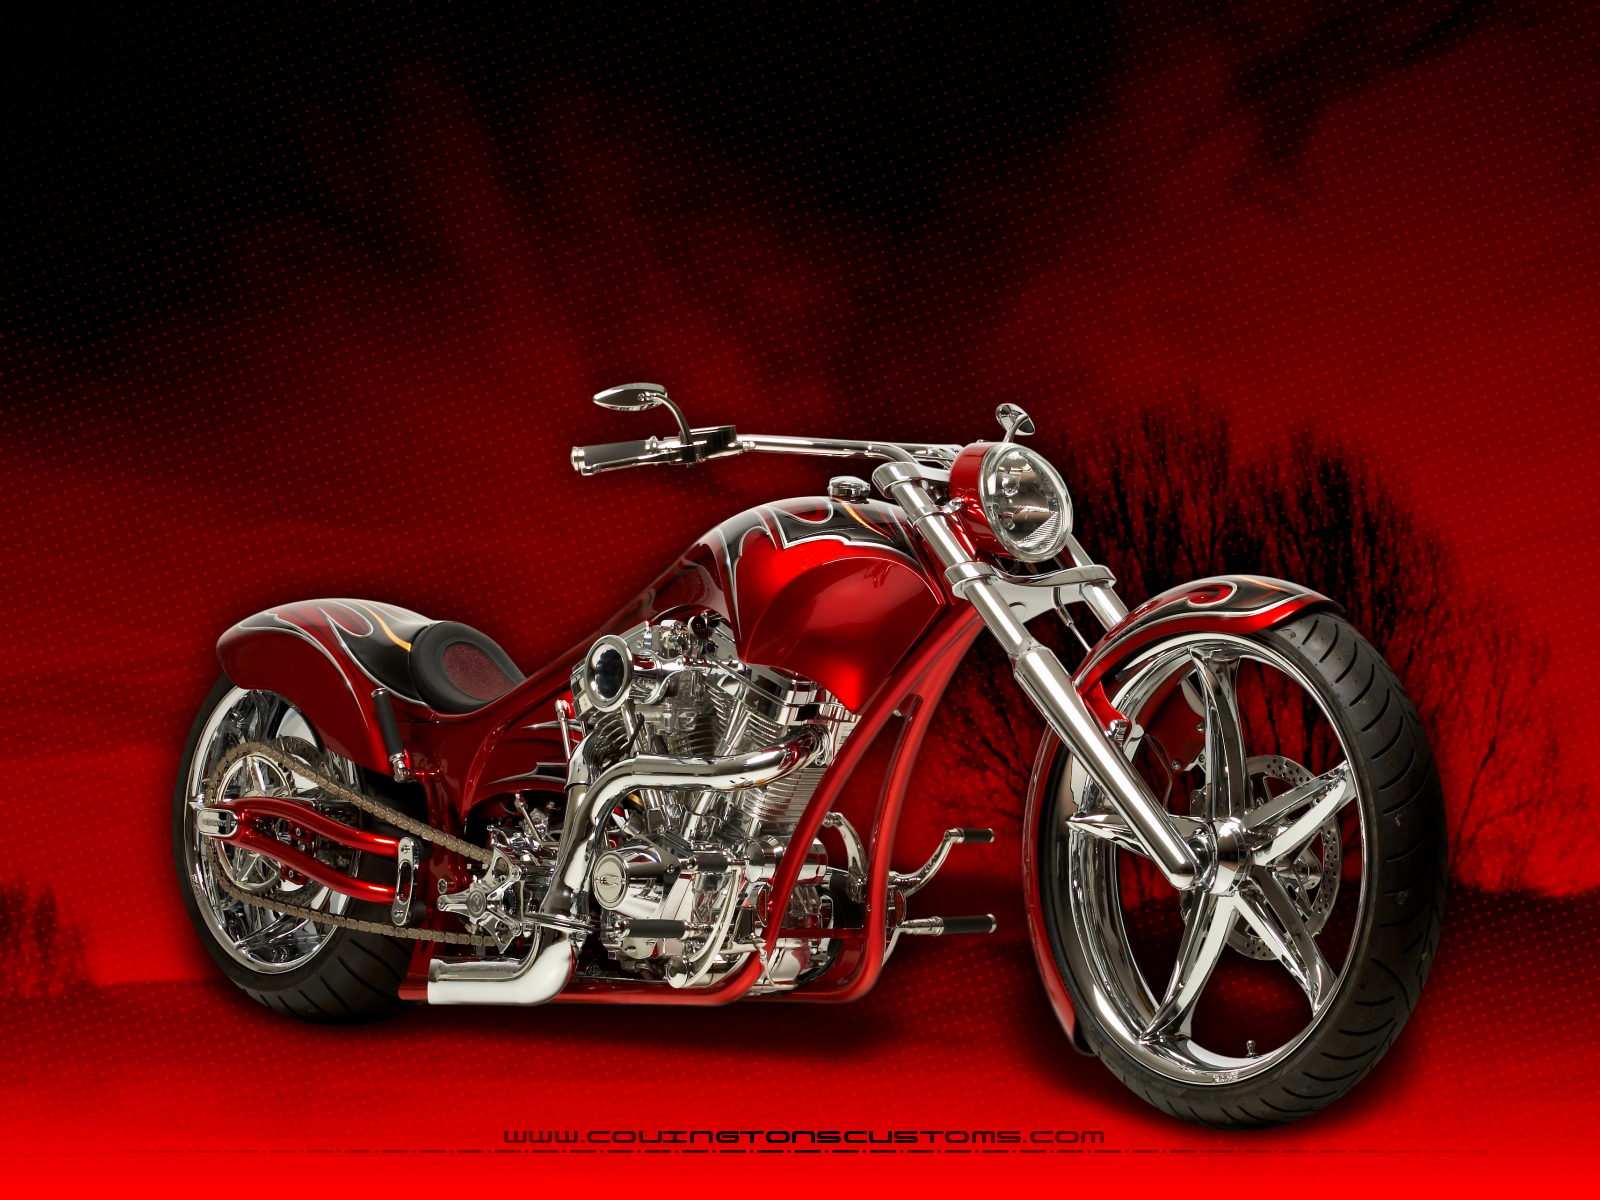 Motorcycle Wallpaper Ing Gallery